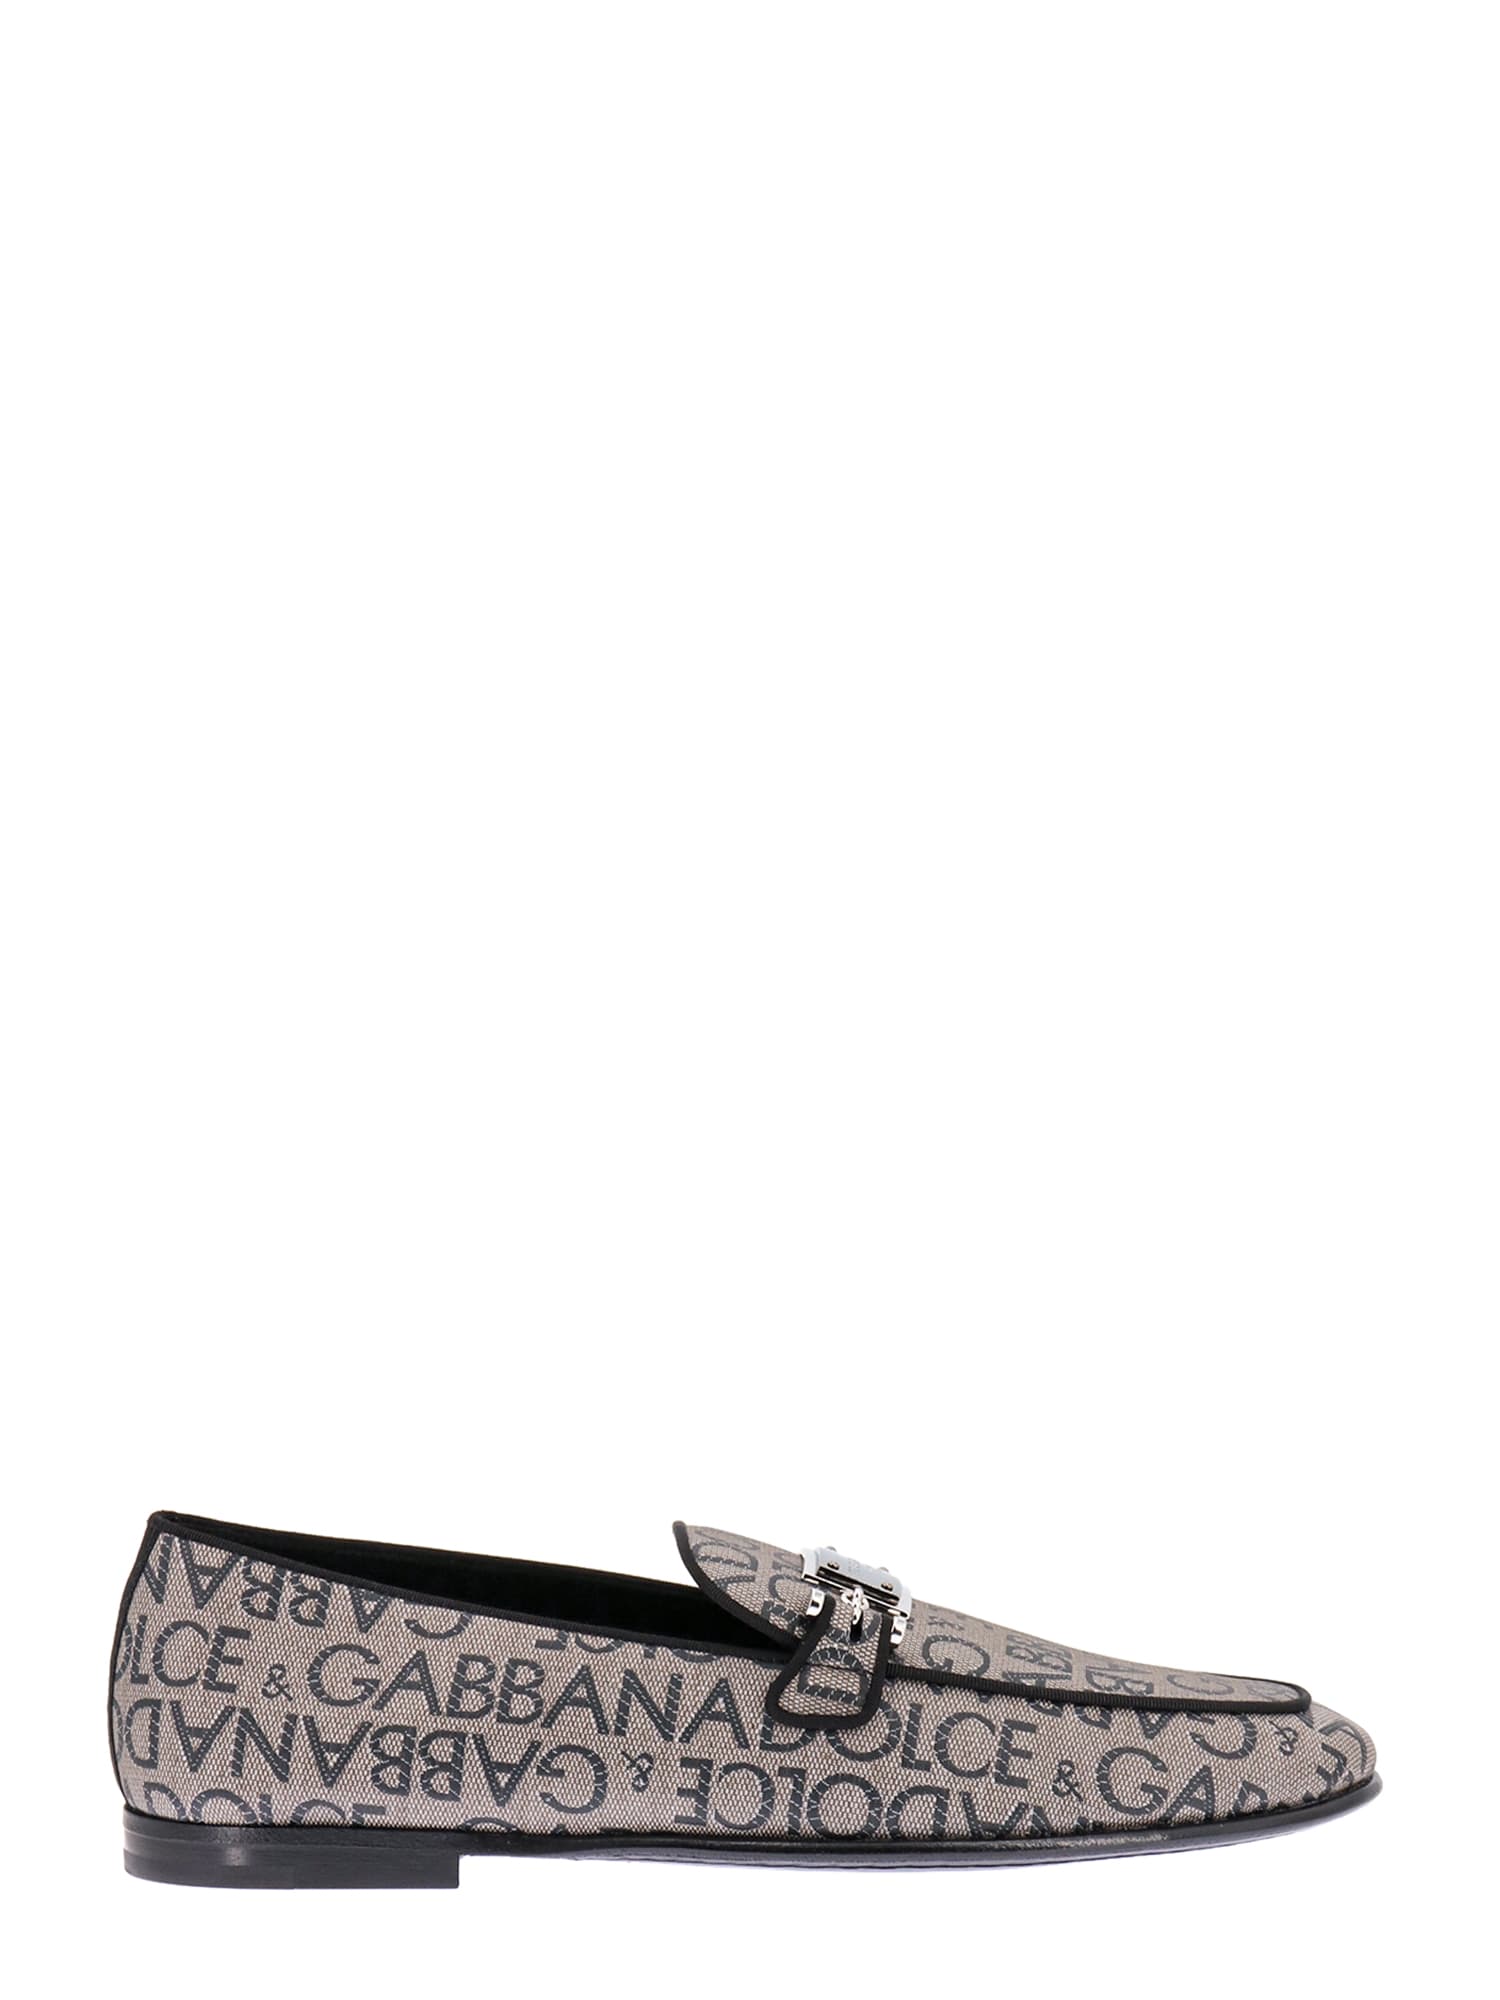 Dolce & Gabbana Loafers In Multi